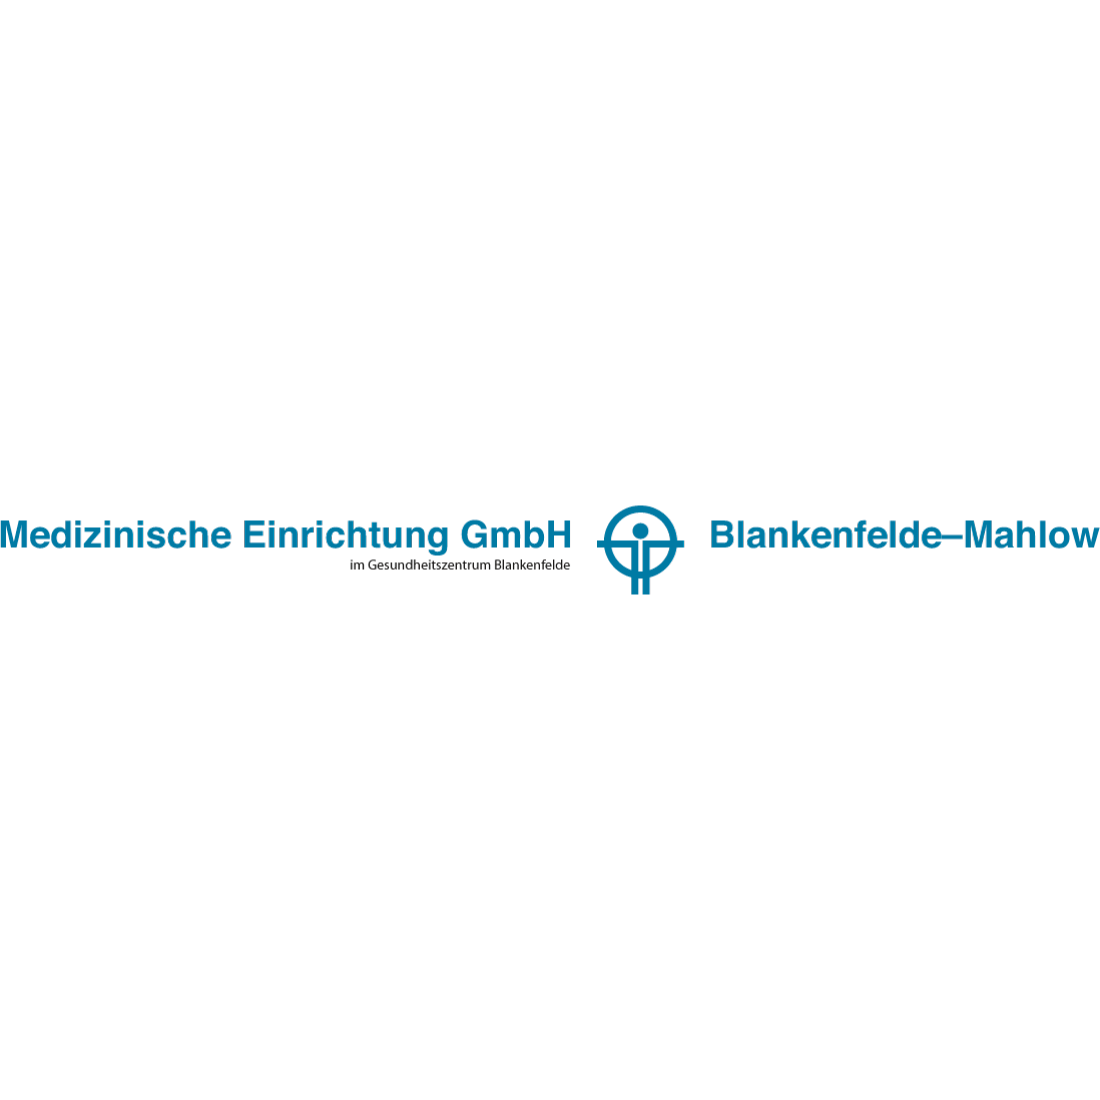 Bild zu Medizinische Einrichtung GmbH Blankenfelde (MEG) in Blankenfelde Mahlow